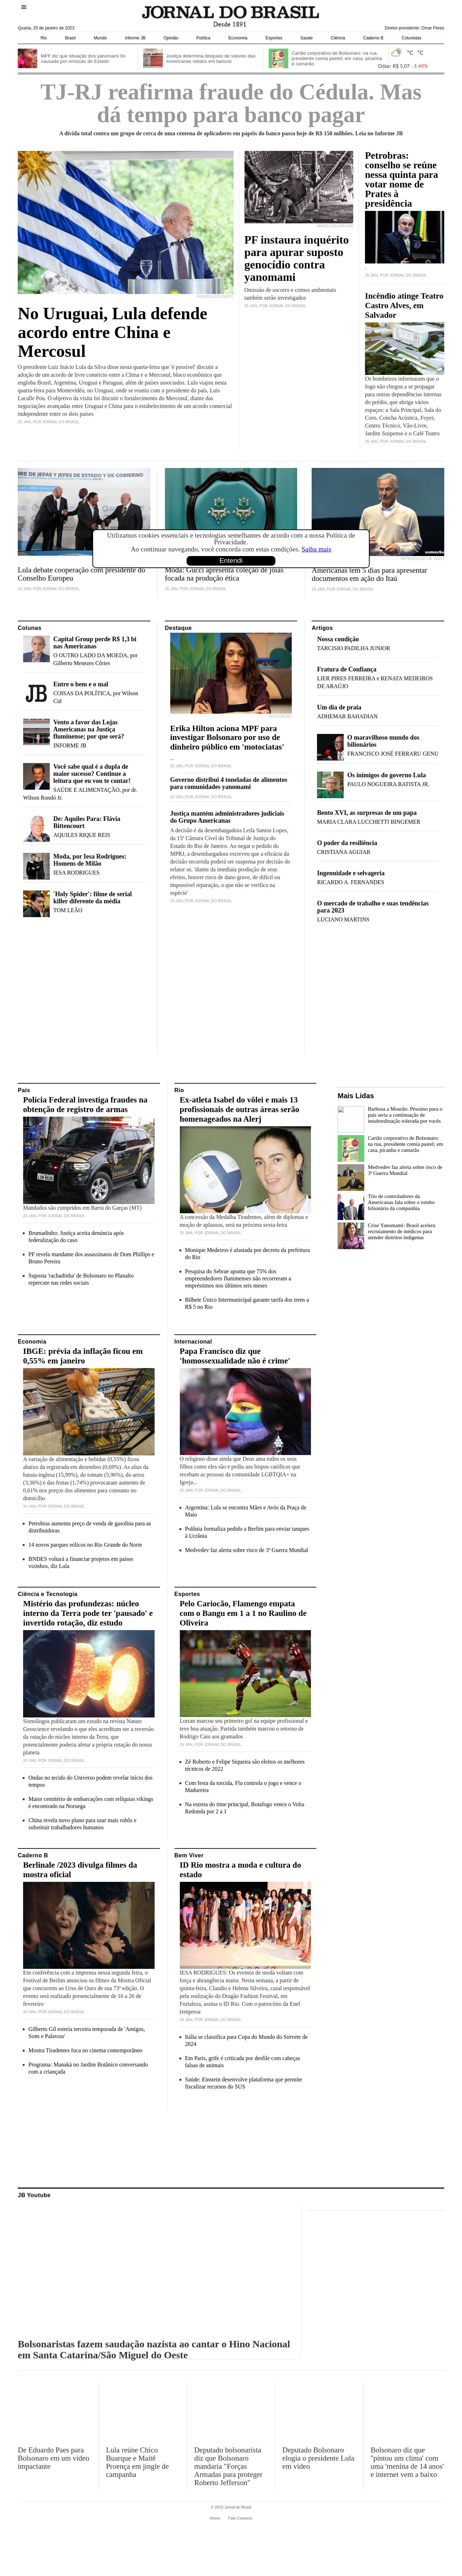 Jornal do Brasil at 2023-01-25 20:13:56-03:00 local time